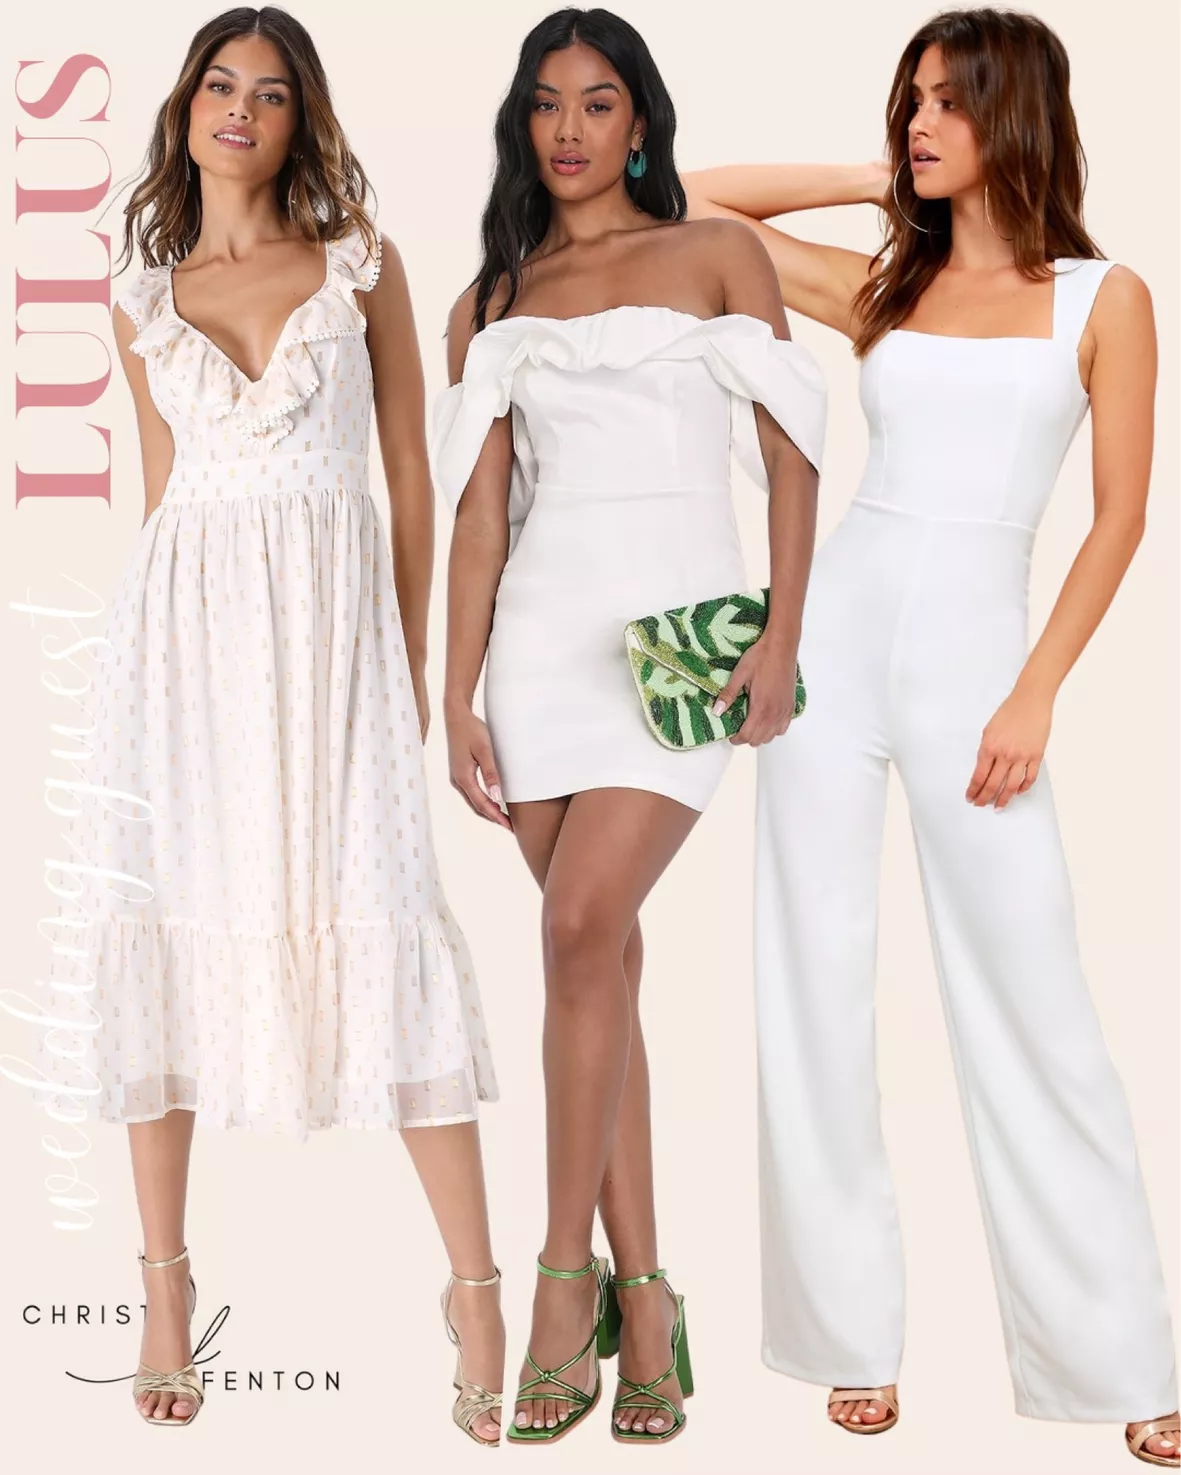 White Midi Dress - Smocked Dress - Tie-Strap Midi Dress - Lulus